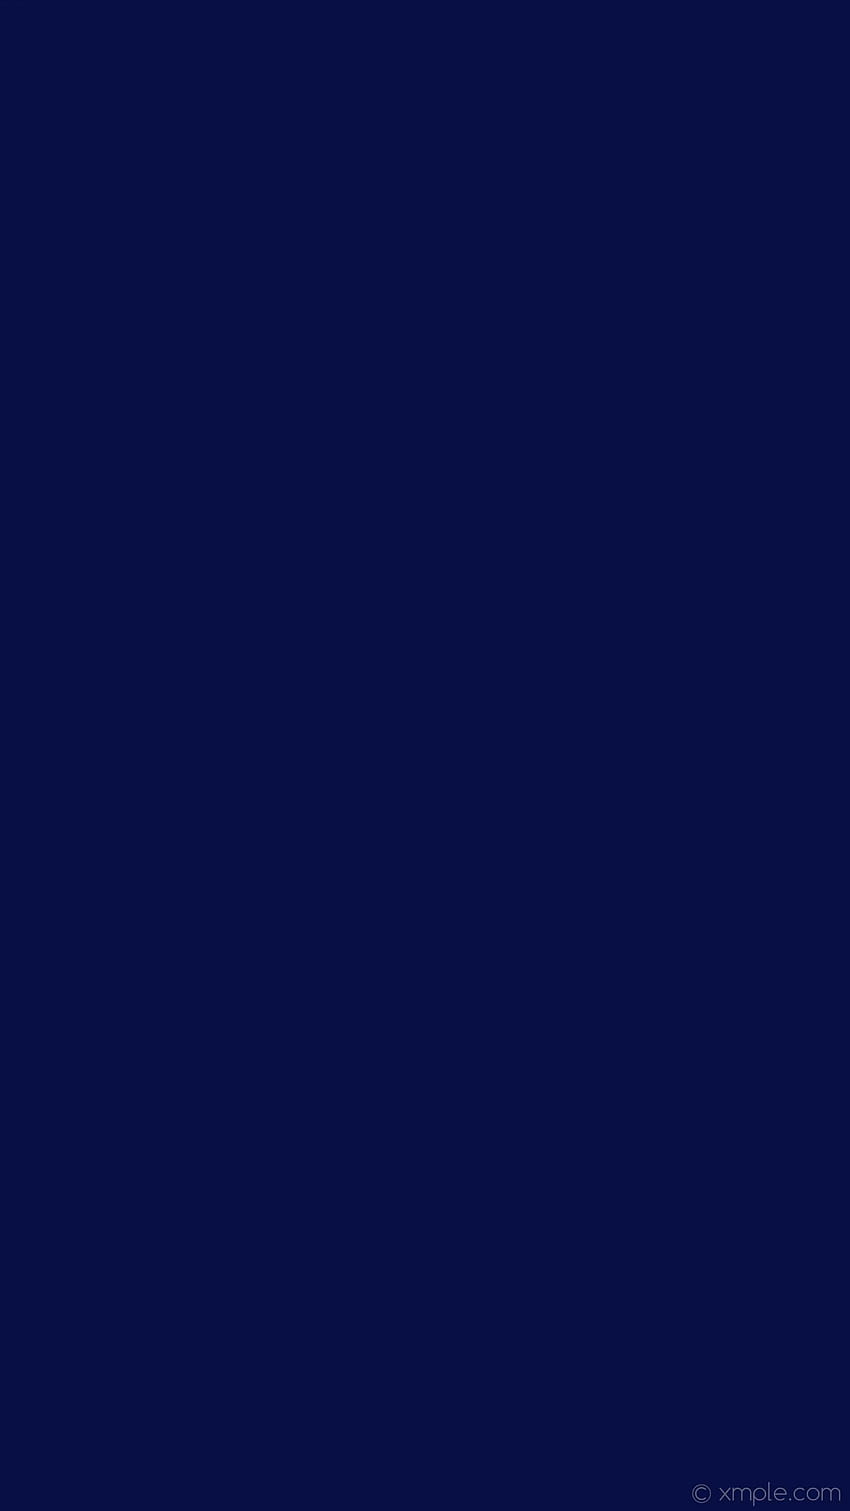 Midnight Blue High Resolution Dark Blue, solid navy blue iphone HD phone wallpaper